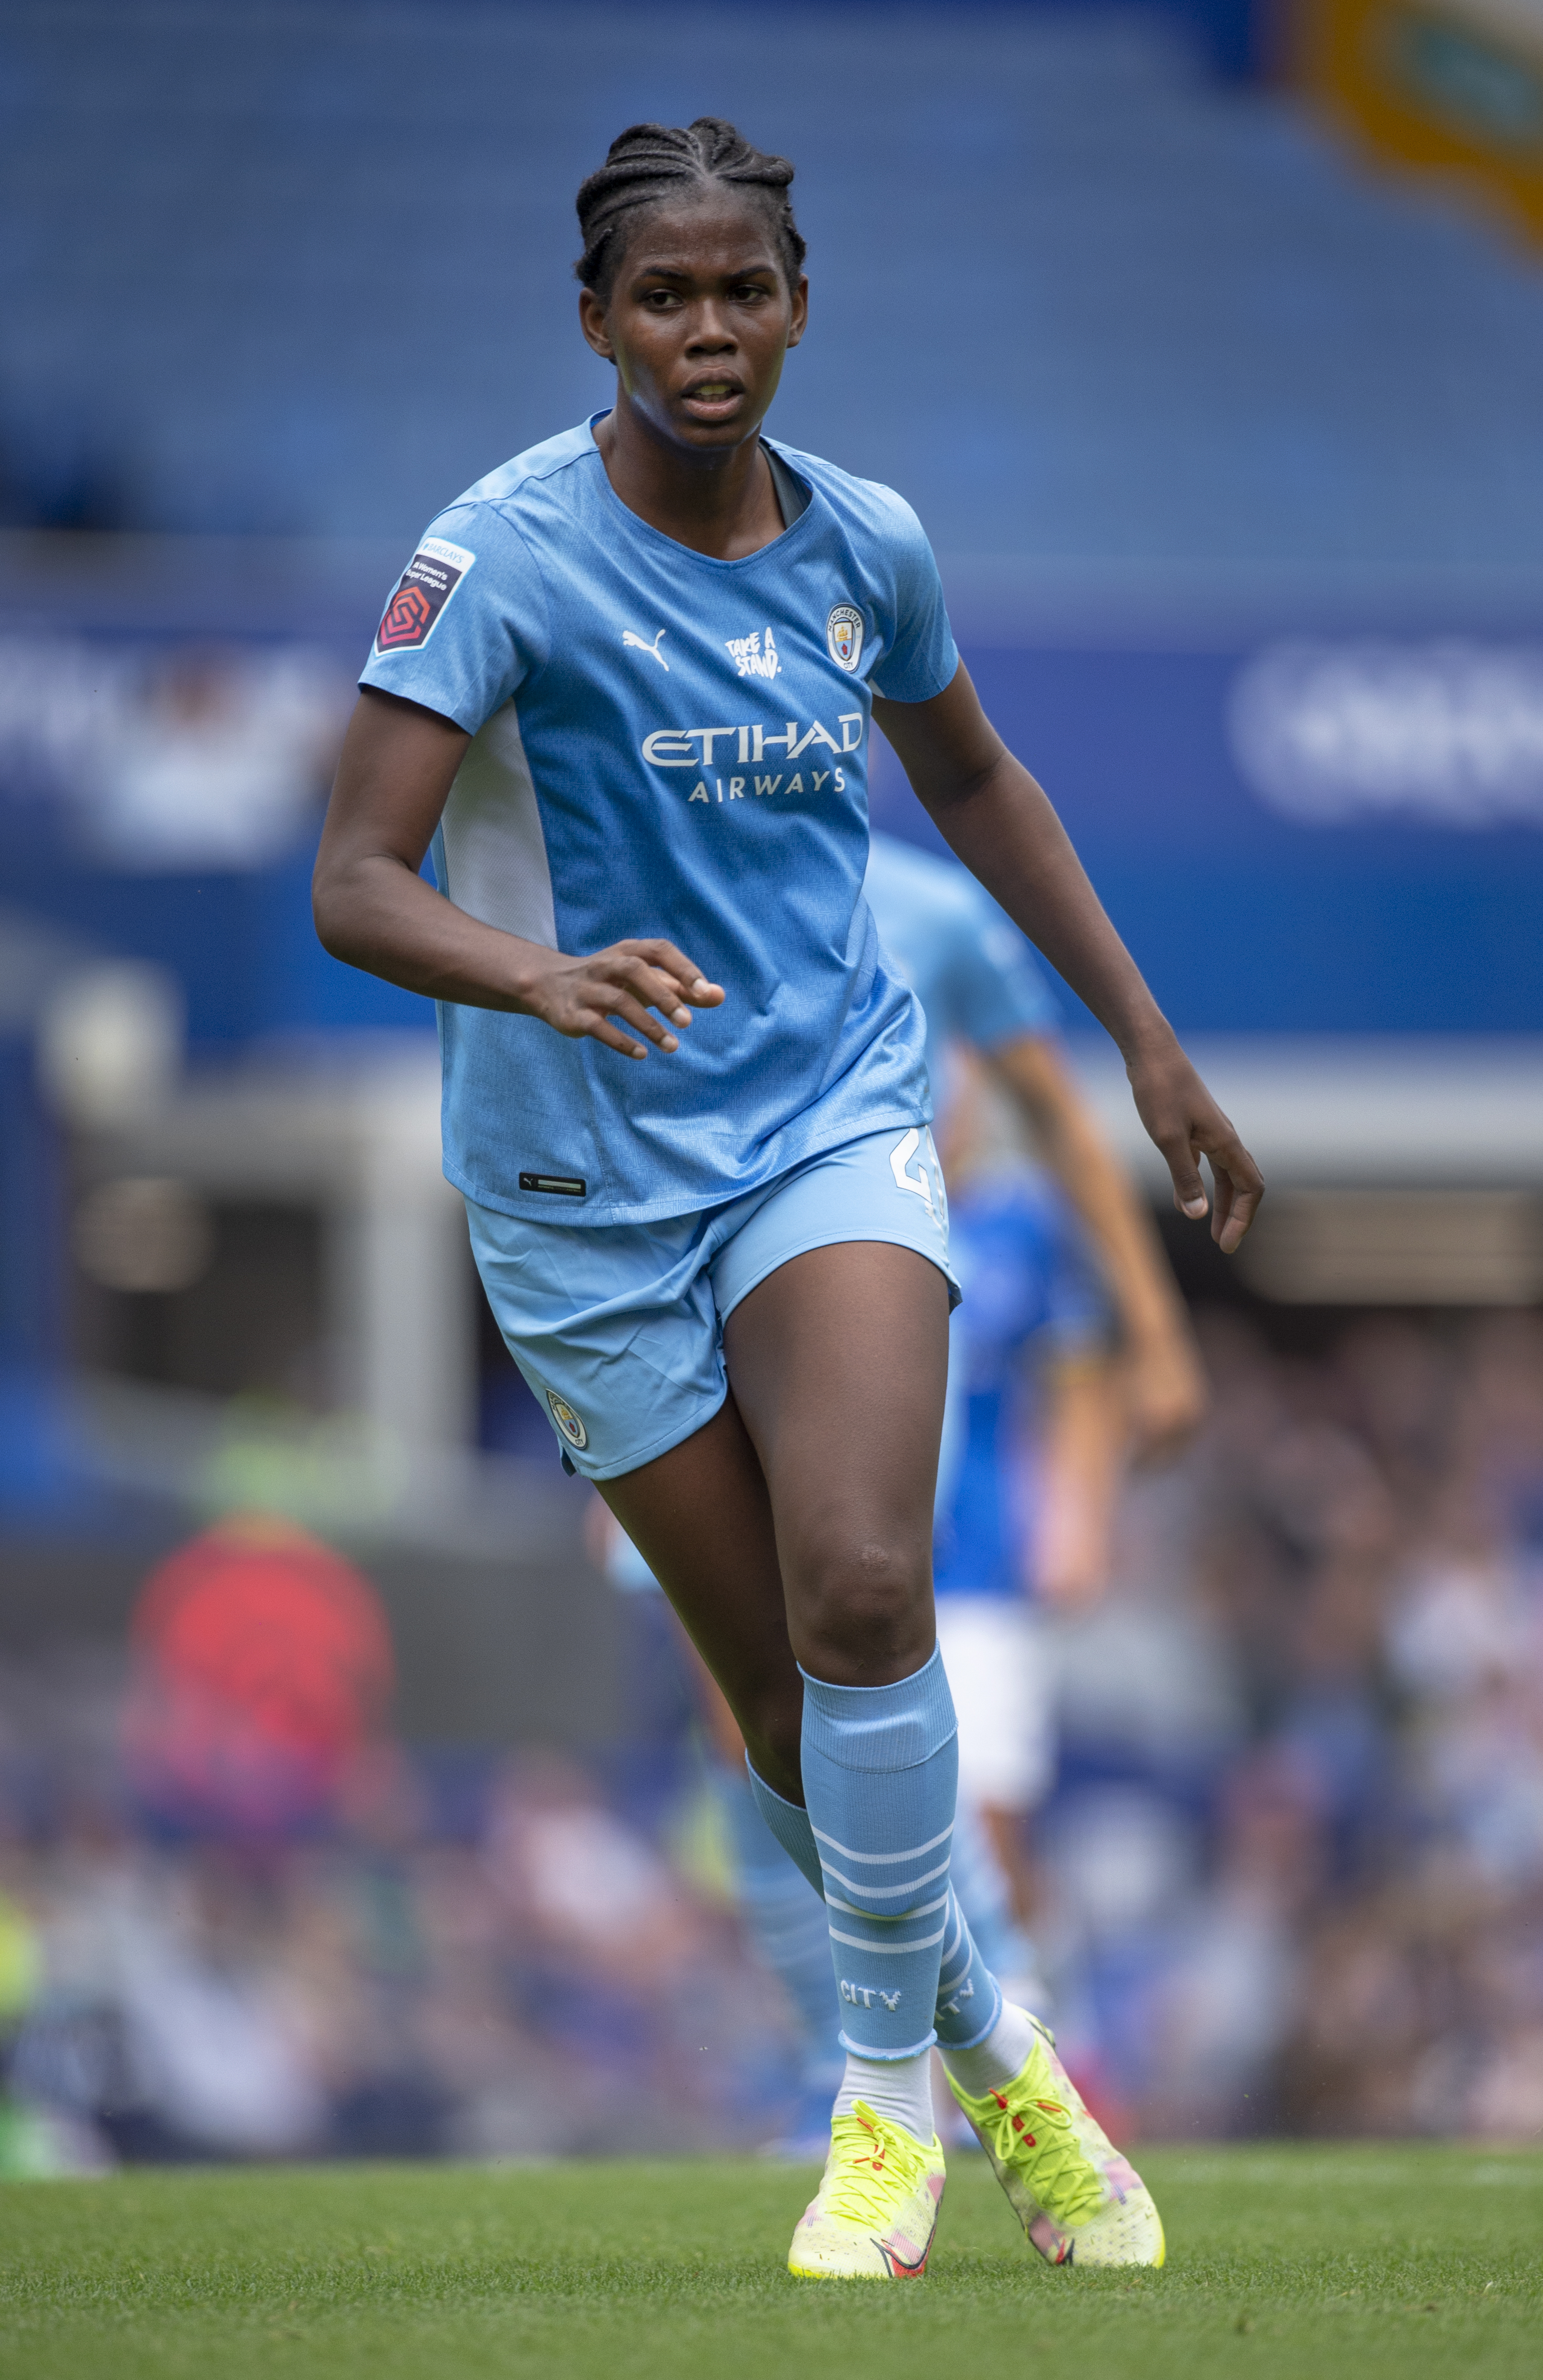 Everton Women v Manchester City Women - Barclays FA Women’s Super League